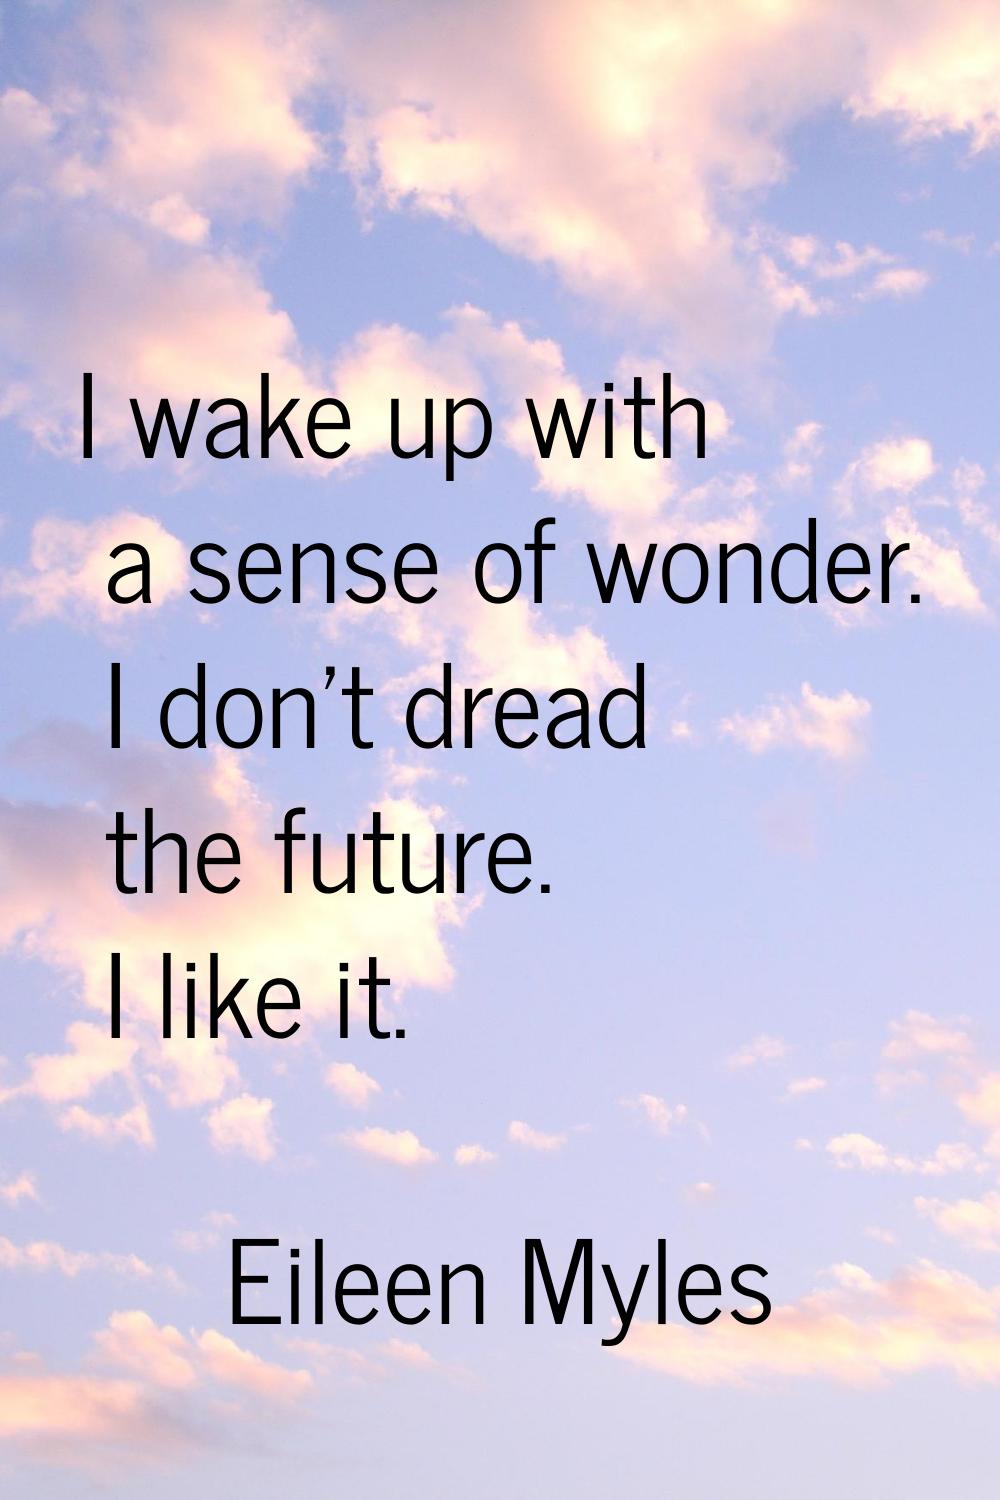 I wake up with a sense of wonder. I don't dread the future. I like it.